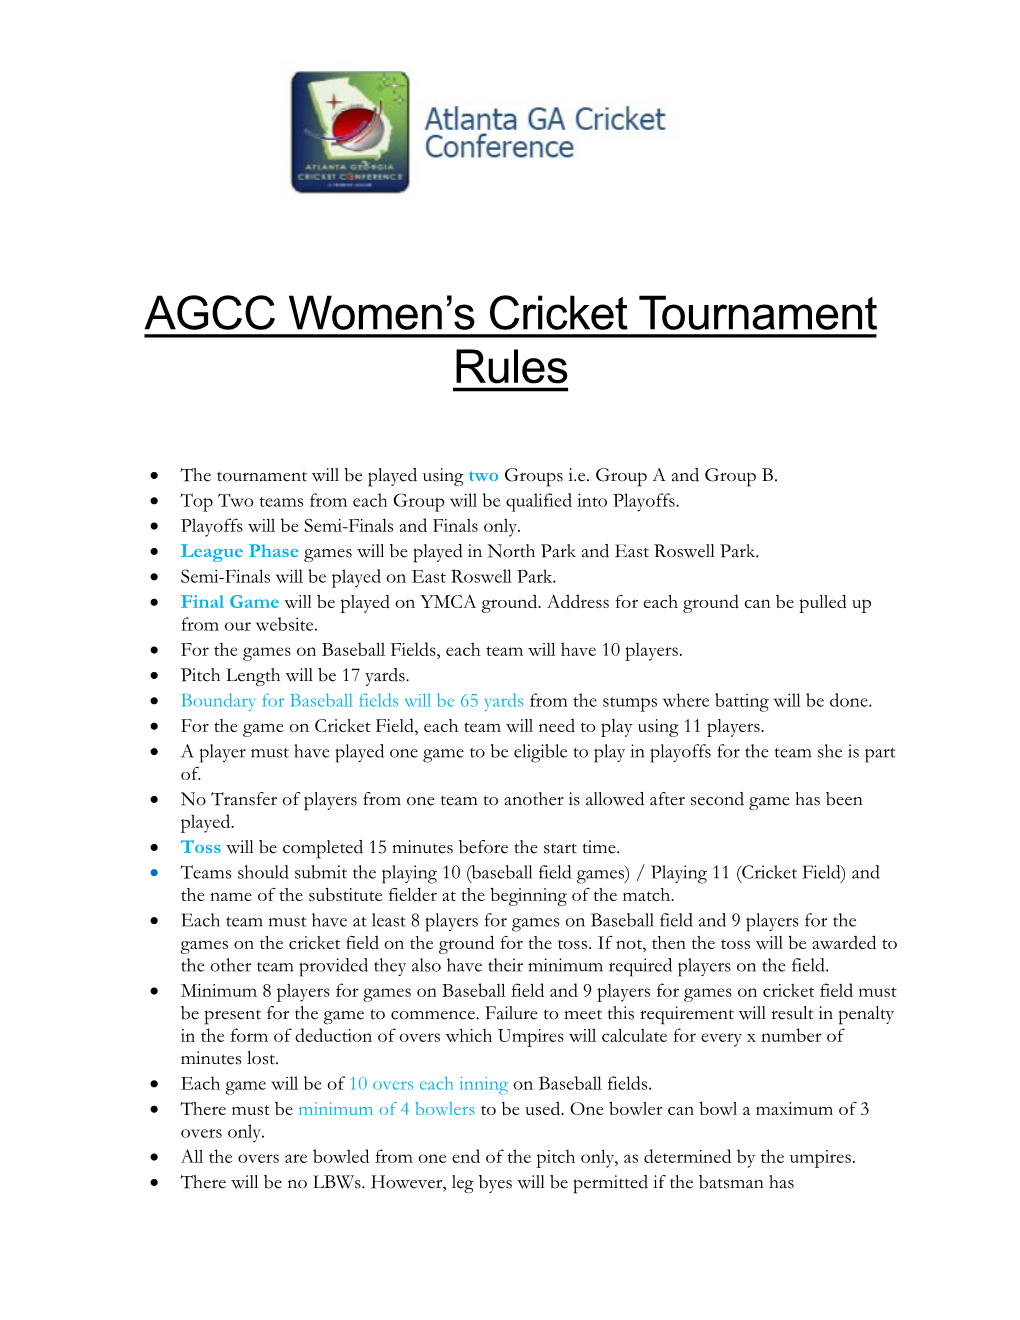 AGCC Women's Cricket Tournament Rules